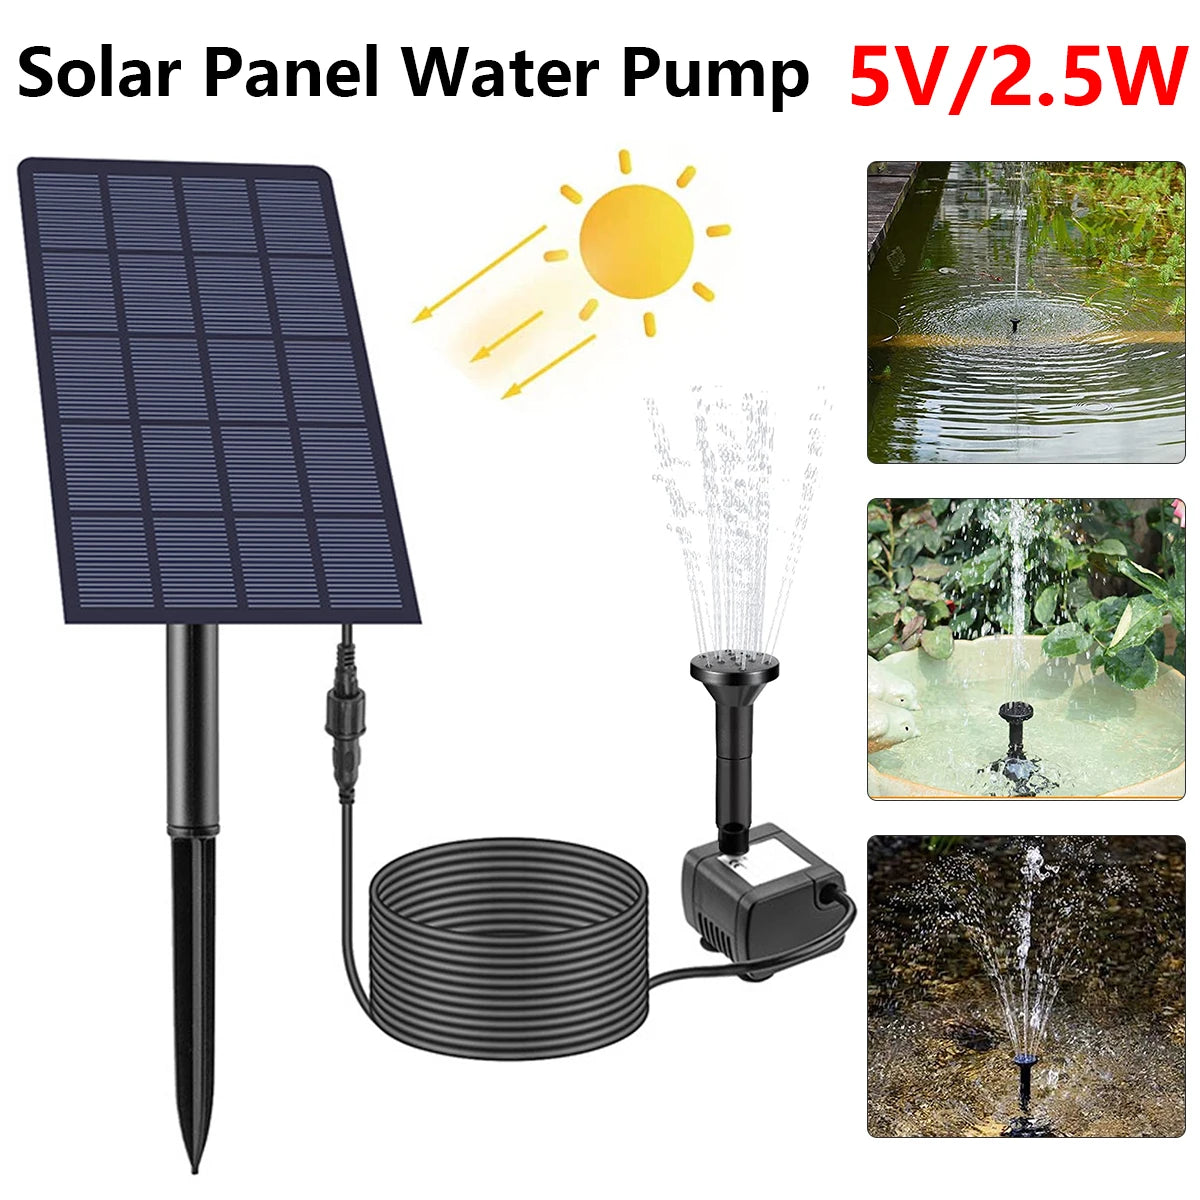 Compact 2.5W Solar Fountain Pump with Rotatable Panel for DIY Garden and Bird Bath Use.